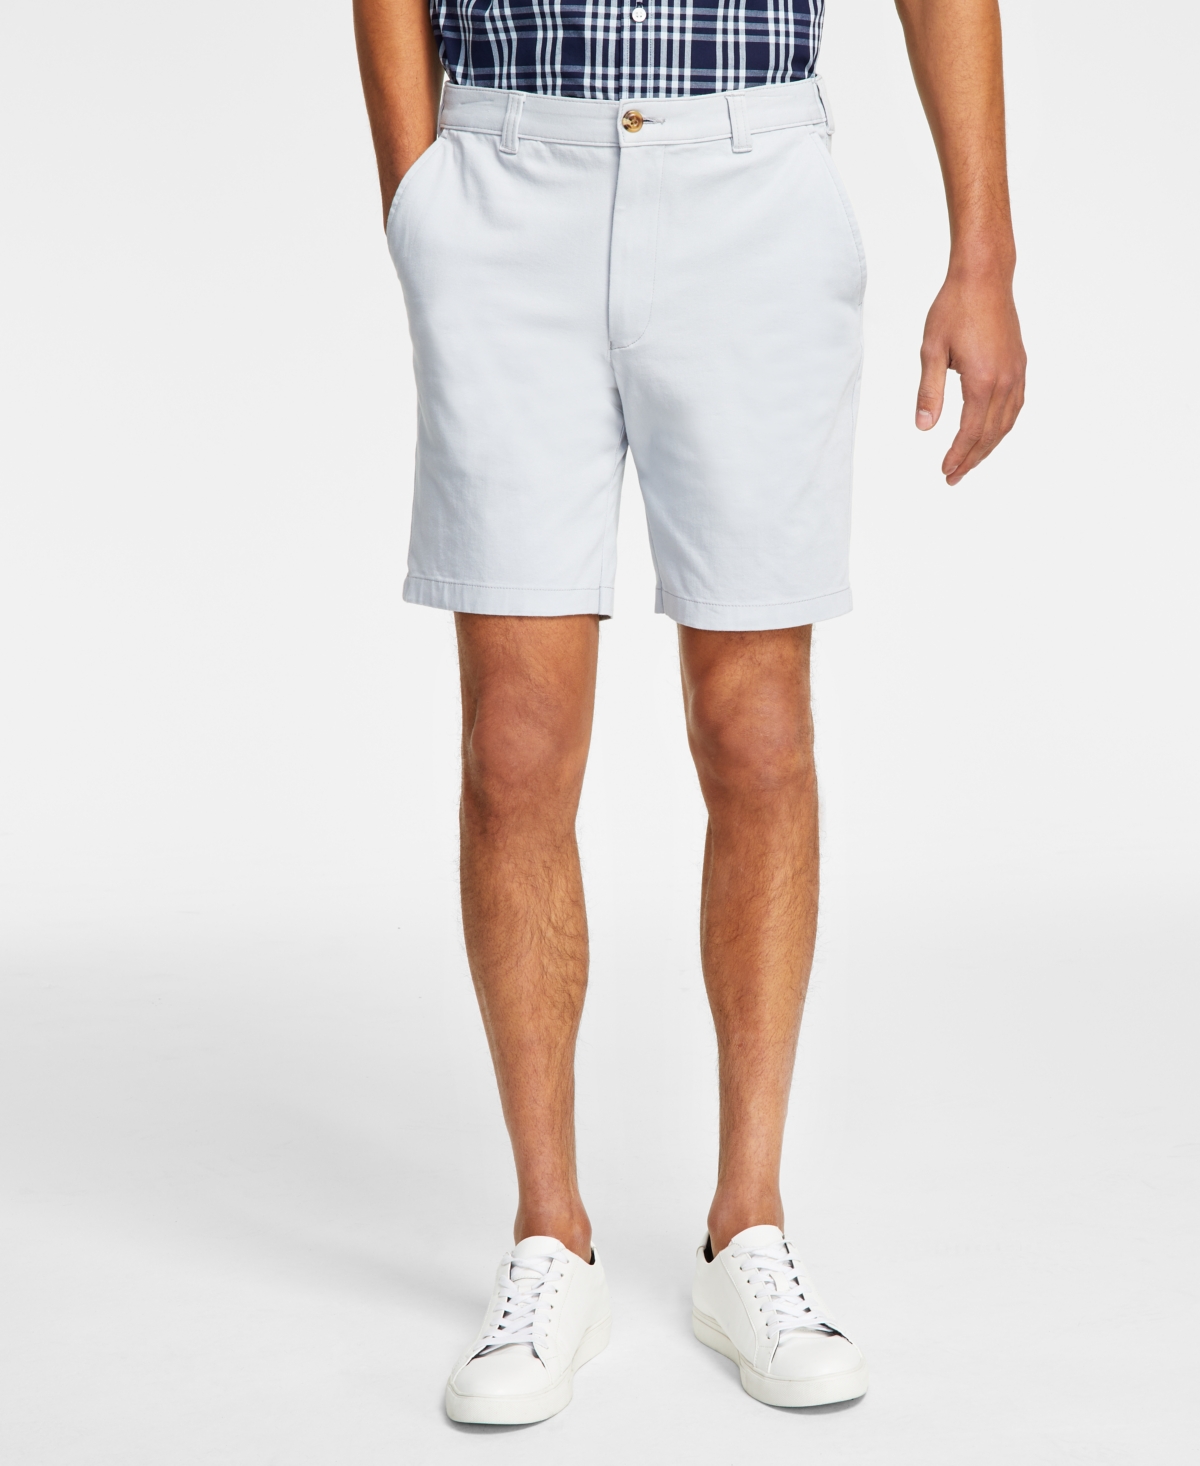 Men's Regular-Fit 9" 4-Way Stretch Shorts, Created for Macy's - Aqua Reef